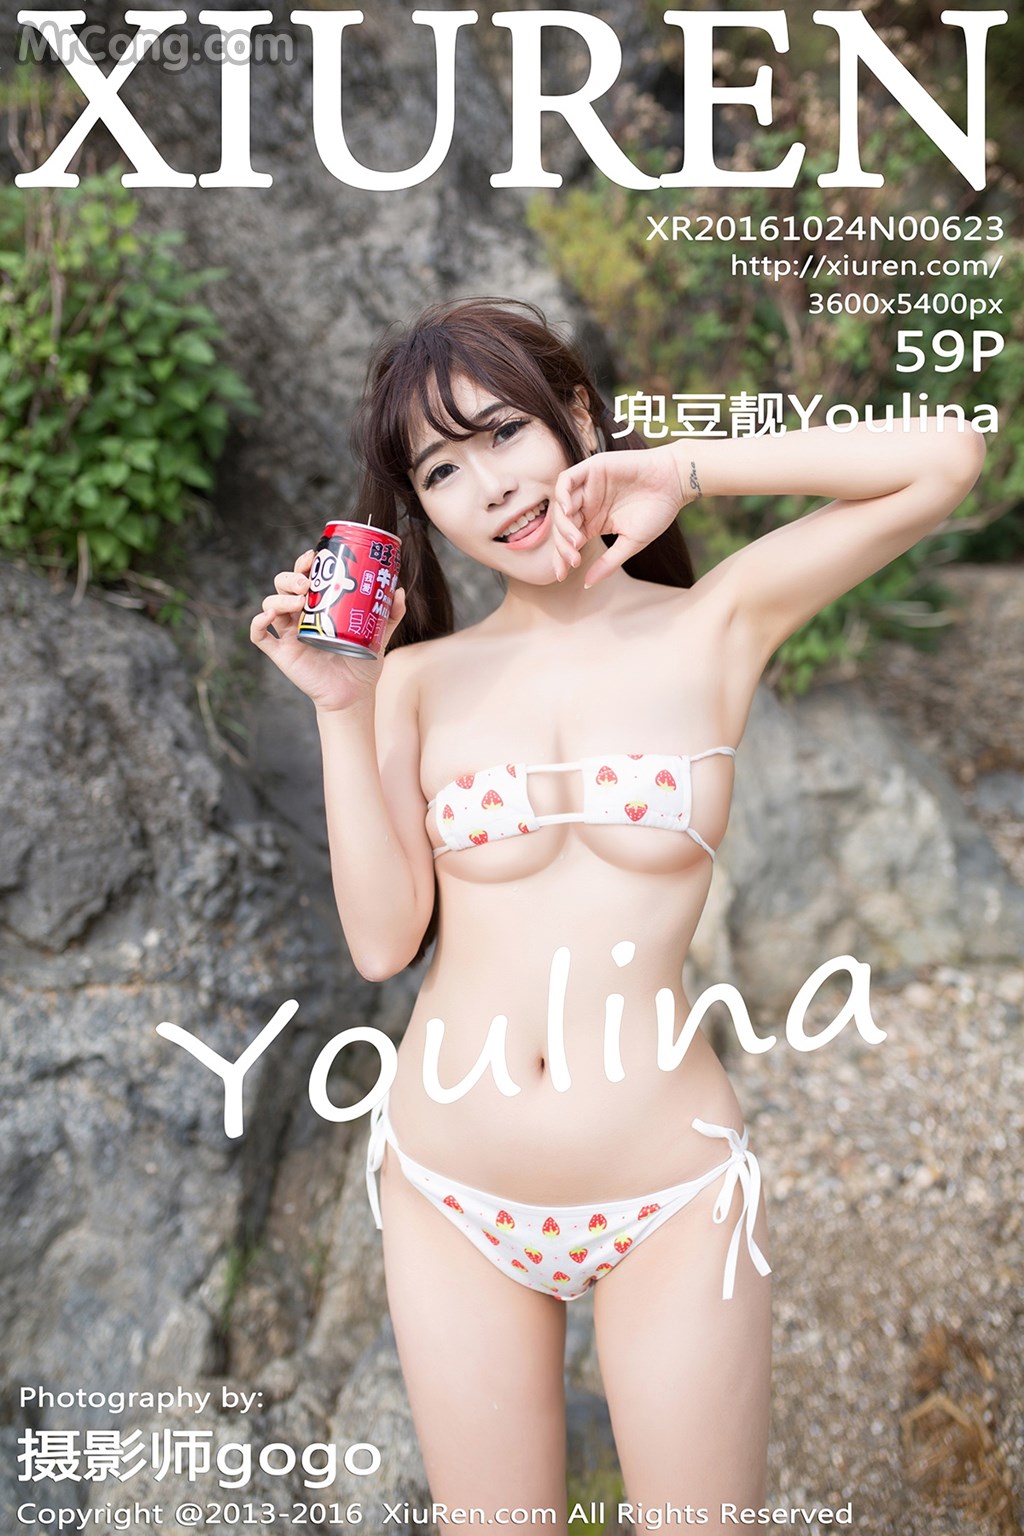 XIUREN No. 683: Model Youlina (兜 豆 靓) (60 photos)